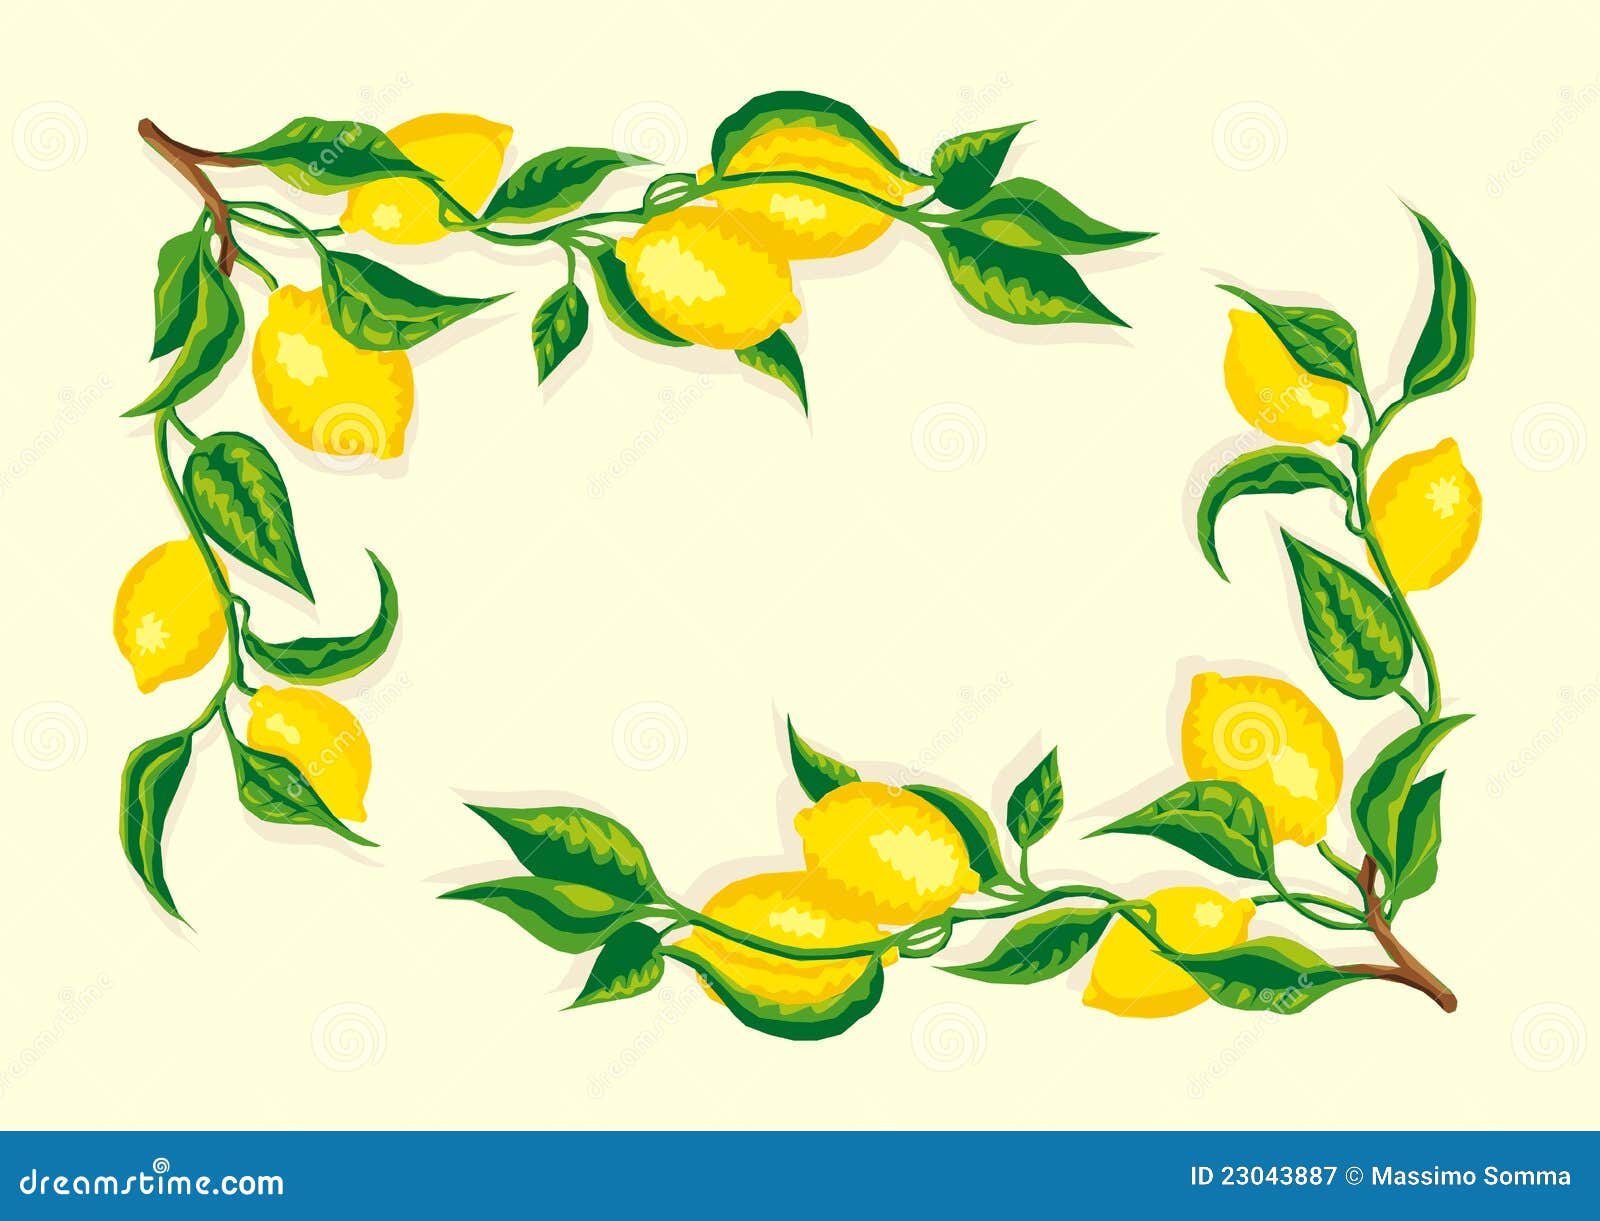 lemon border clip art - photo #16